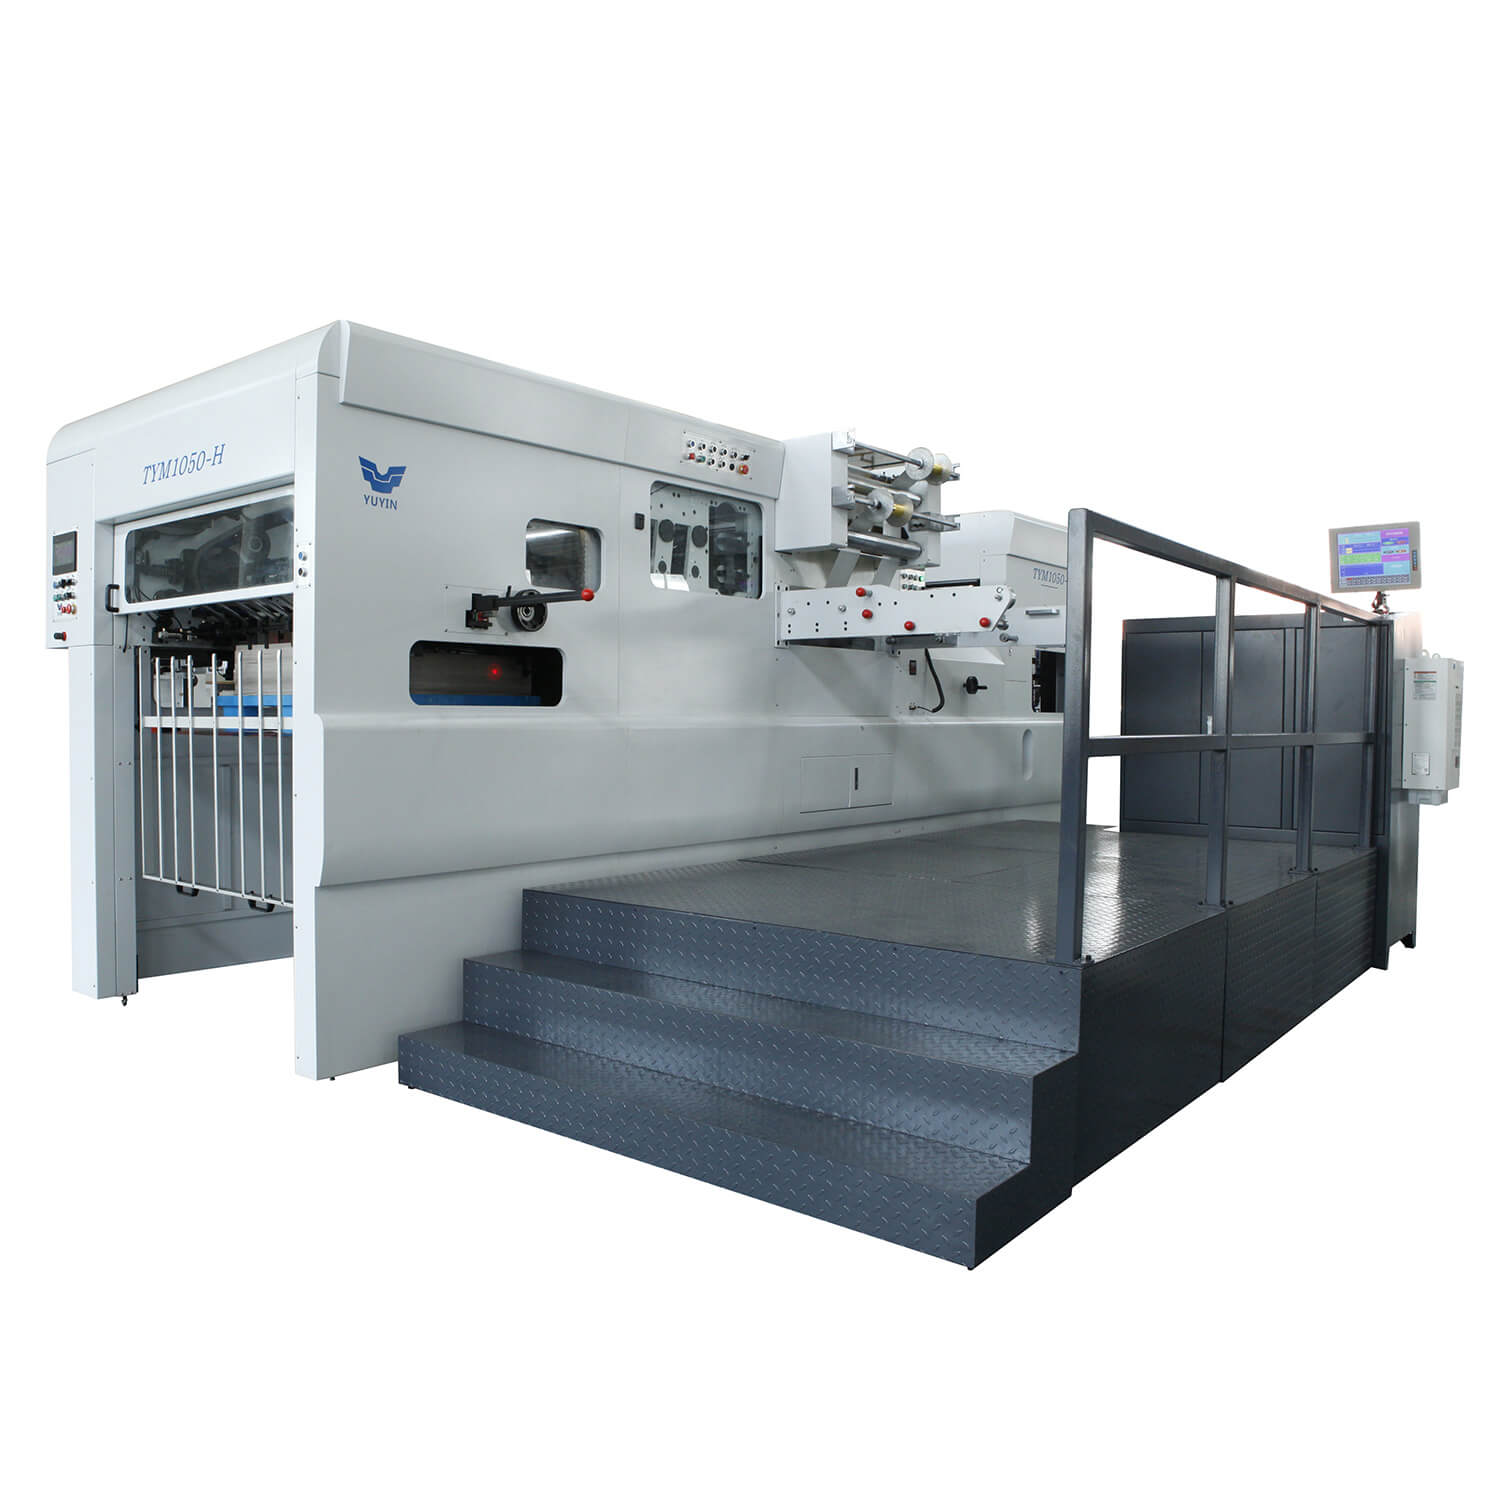 TYM1050-H Automatic Foil Stamping & Die-Cutting Machine